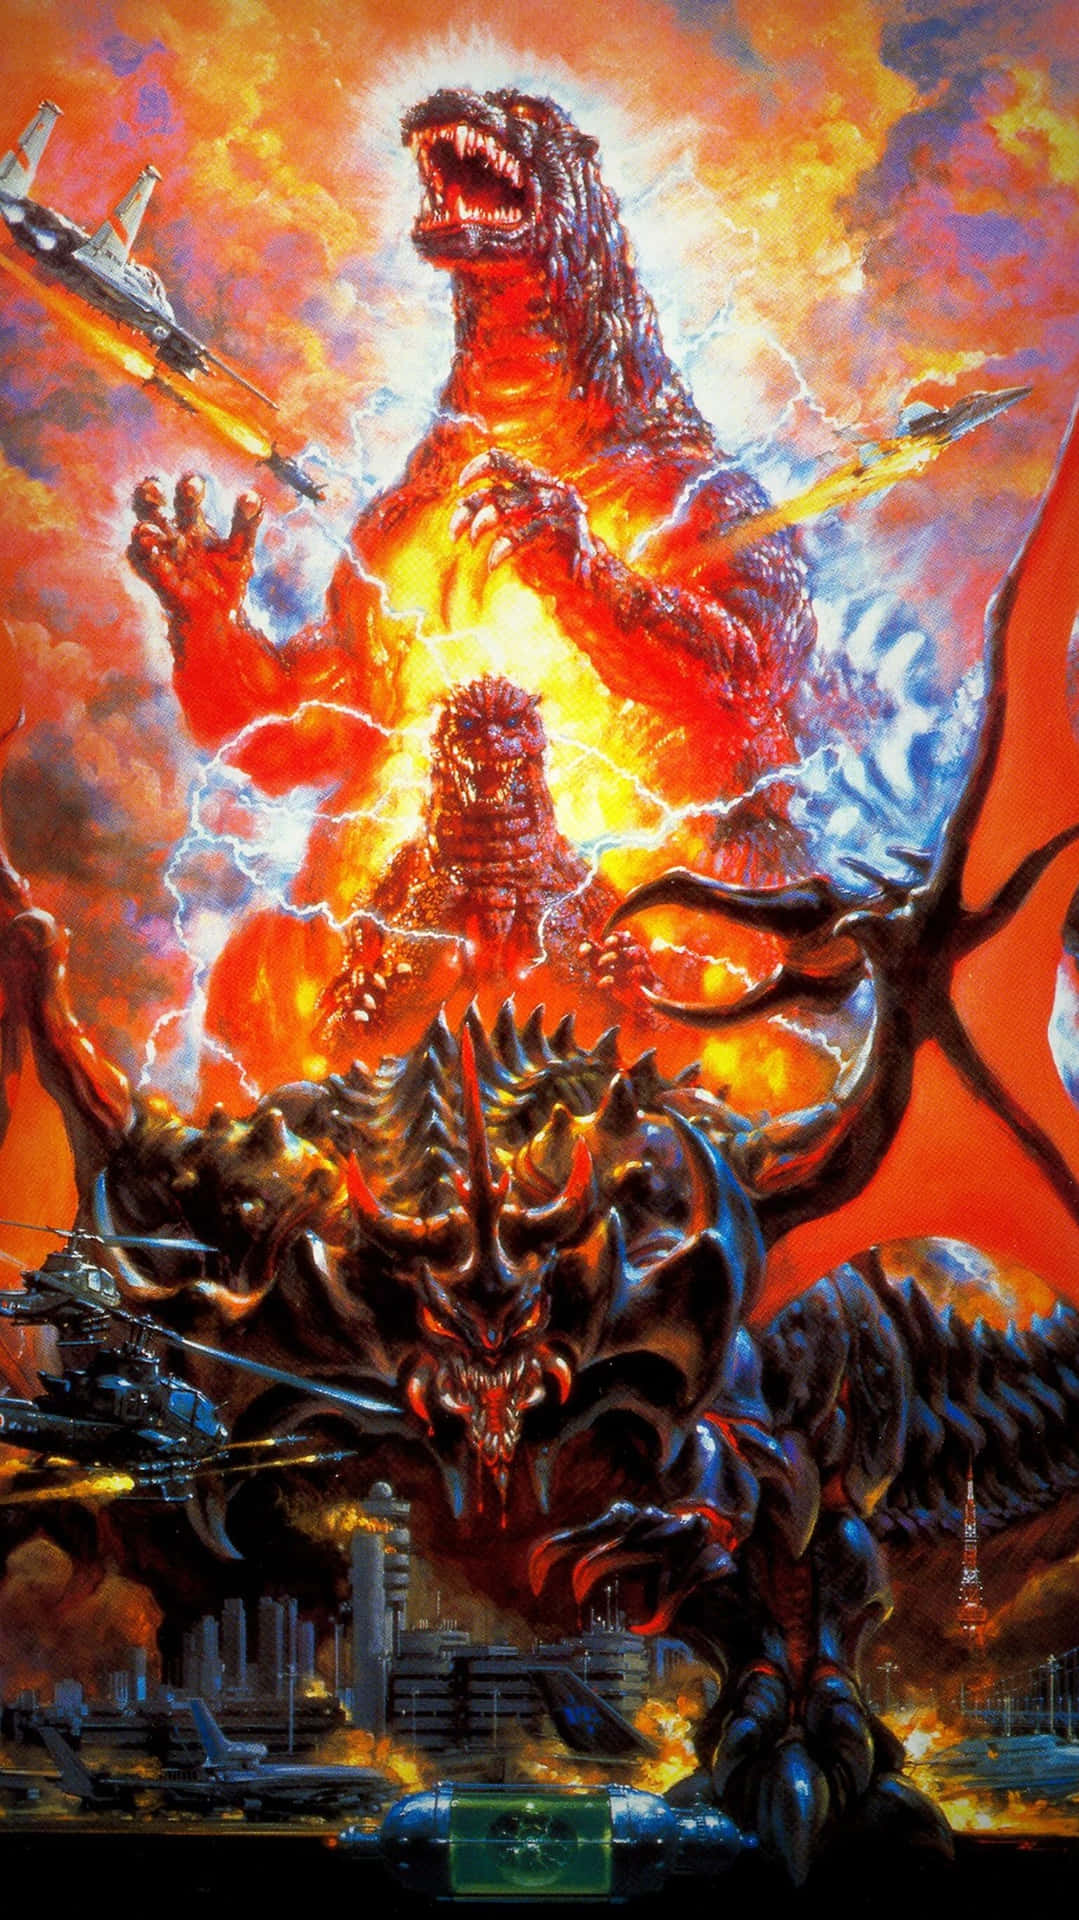 Godzilla and Destoroyah locked in an epic battle Wallpaper